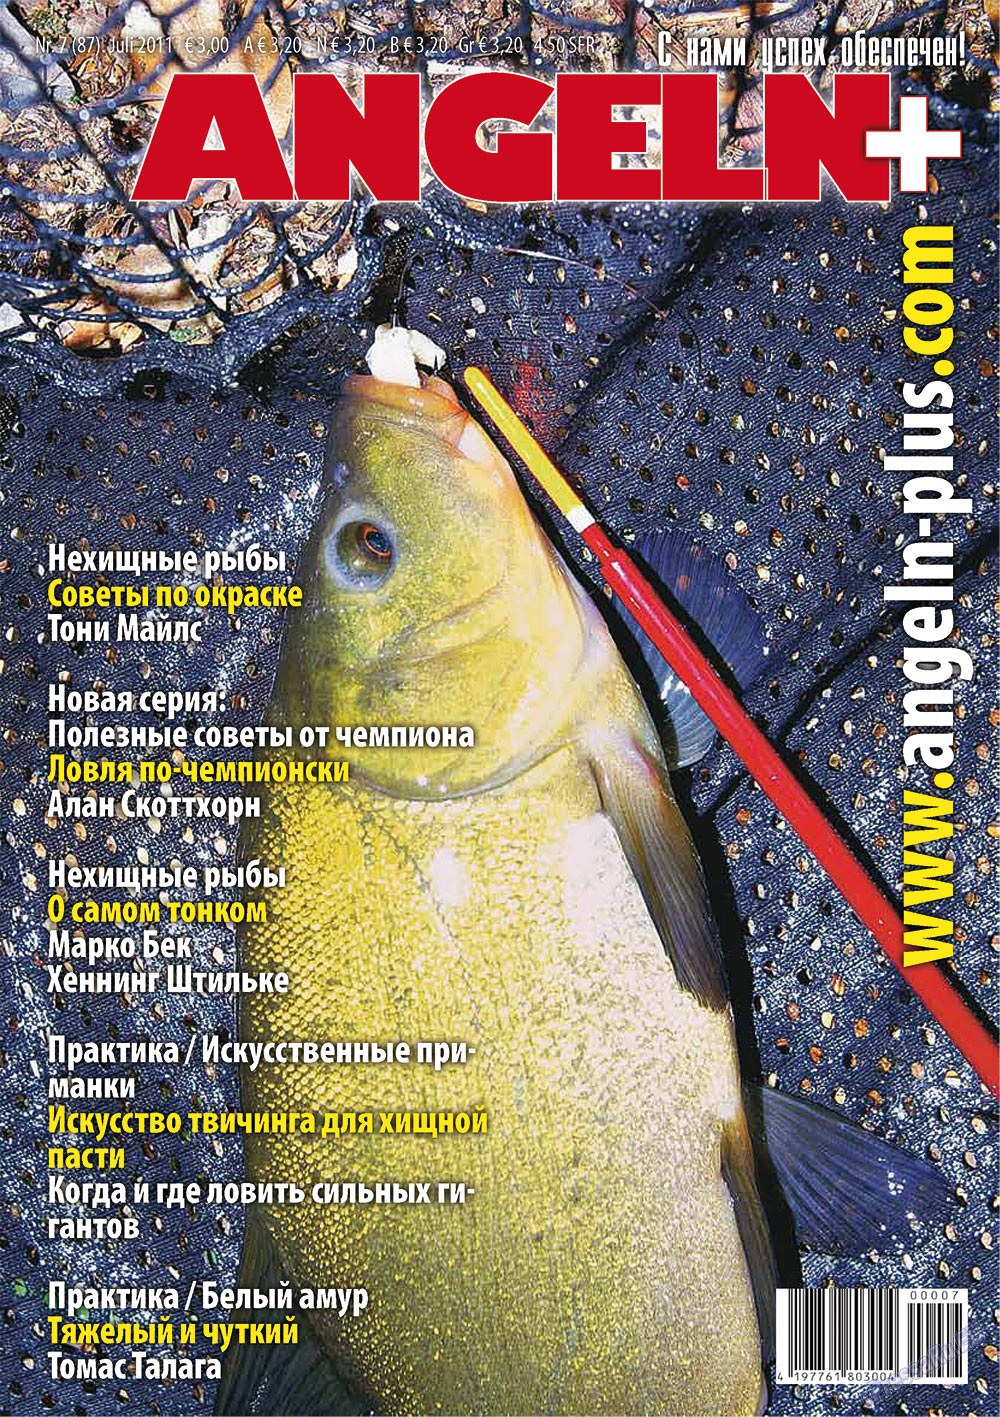 Рыбалка Plus (журнал). 2011 год, номер 5, стр. 1